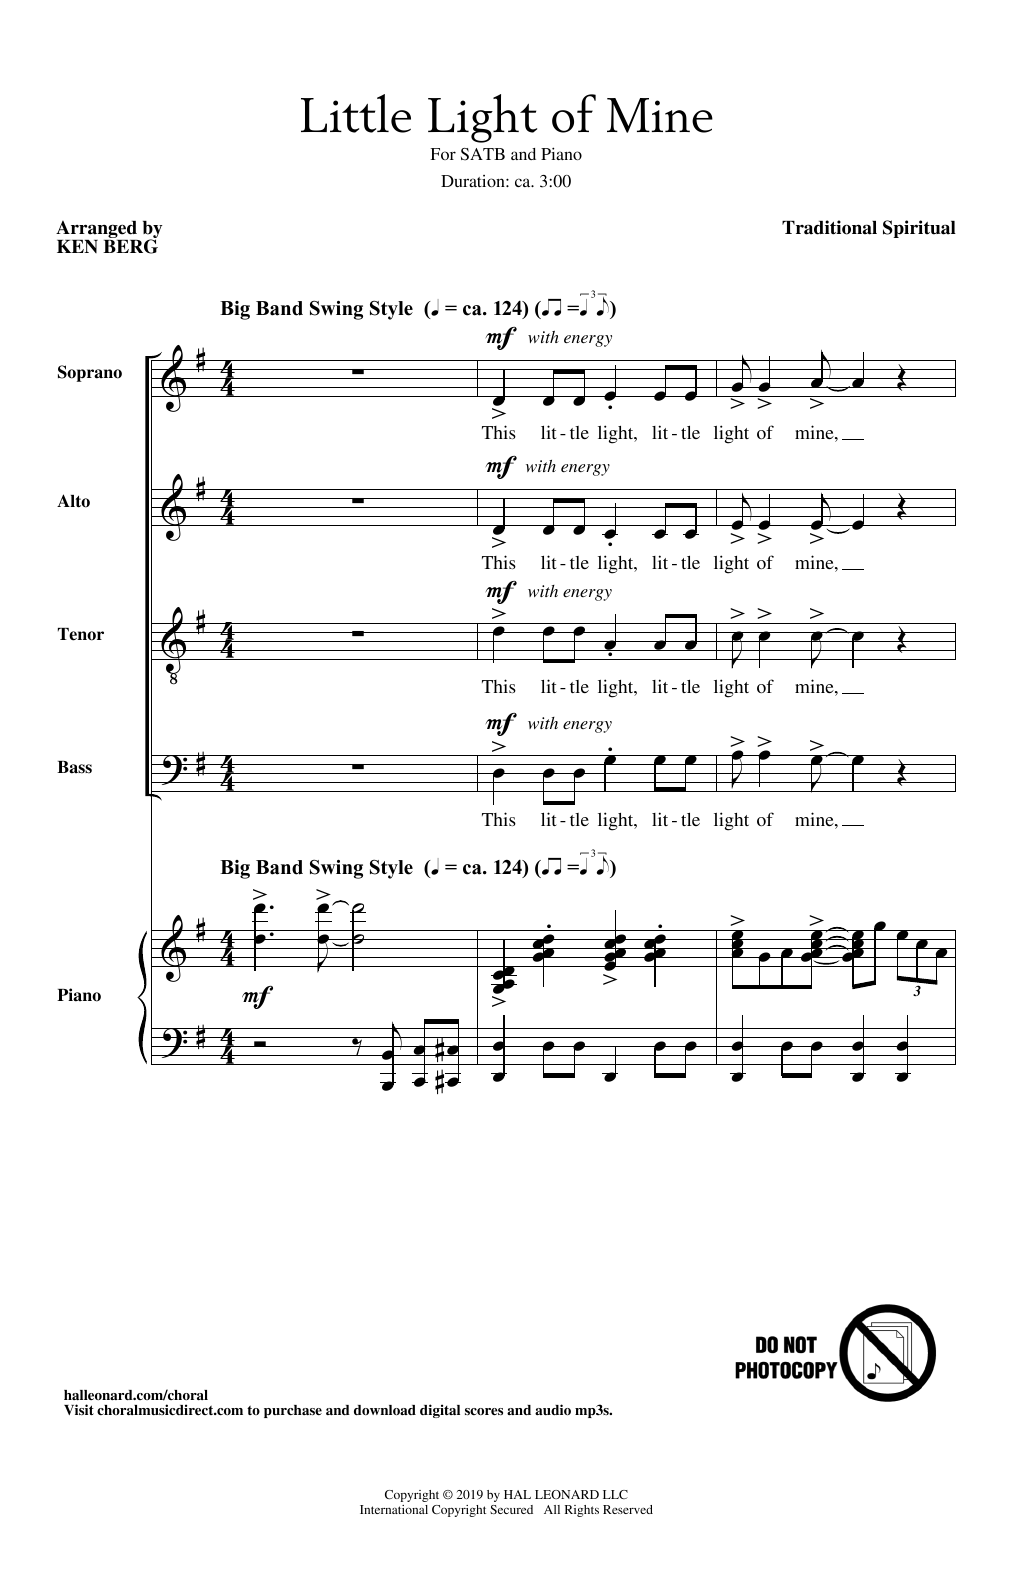 Traditional Spiritual Little Light Of Mine (arr. Ken Berg) Sheet Music Notes & Chords for SATB Choir - Download or Print PDF